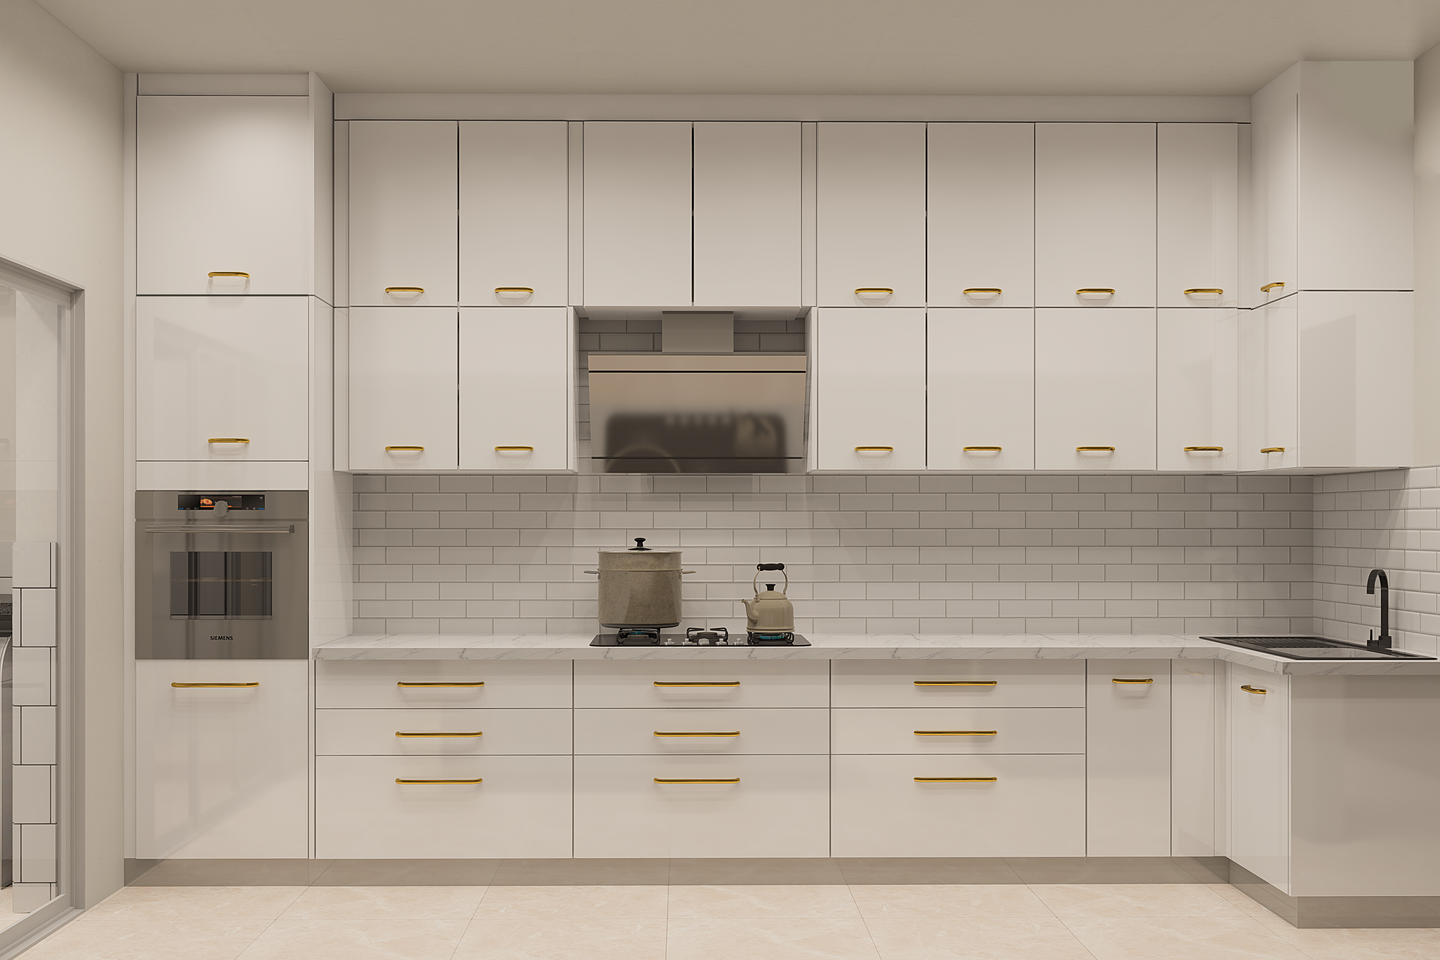 Modular Kitchen Design For Rental Homes - Livspace